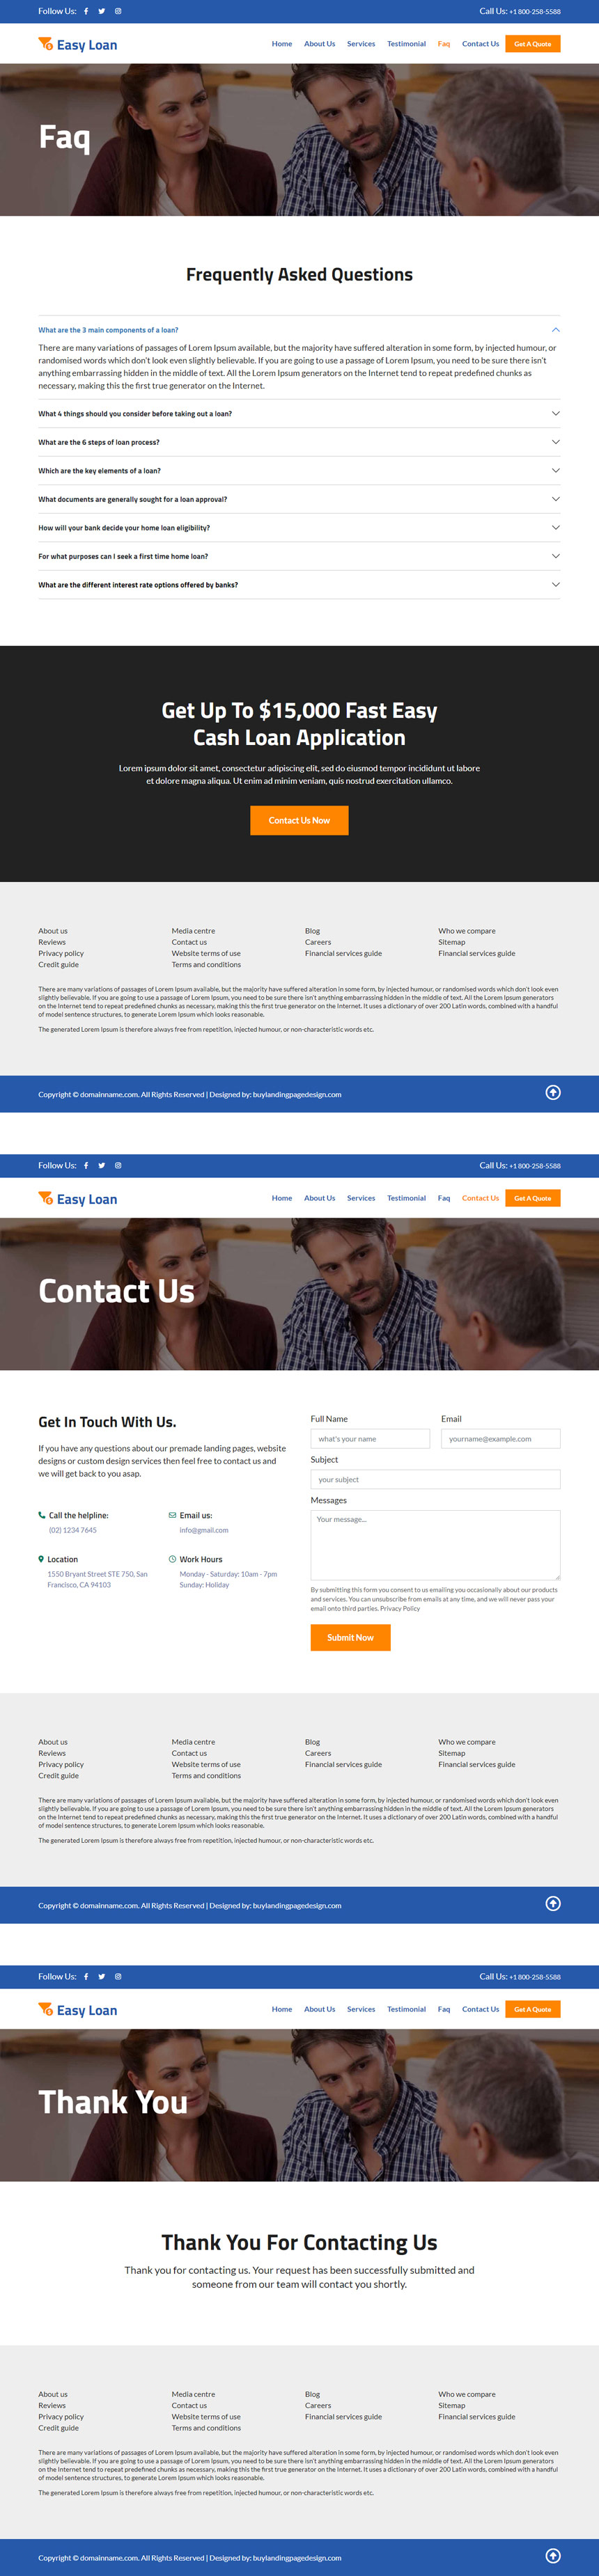 quick loan online application responsive website design